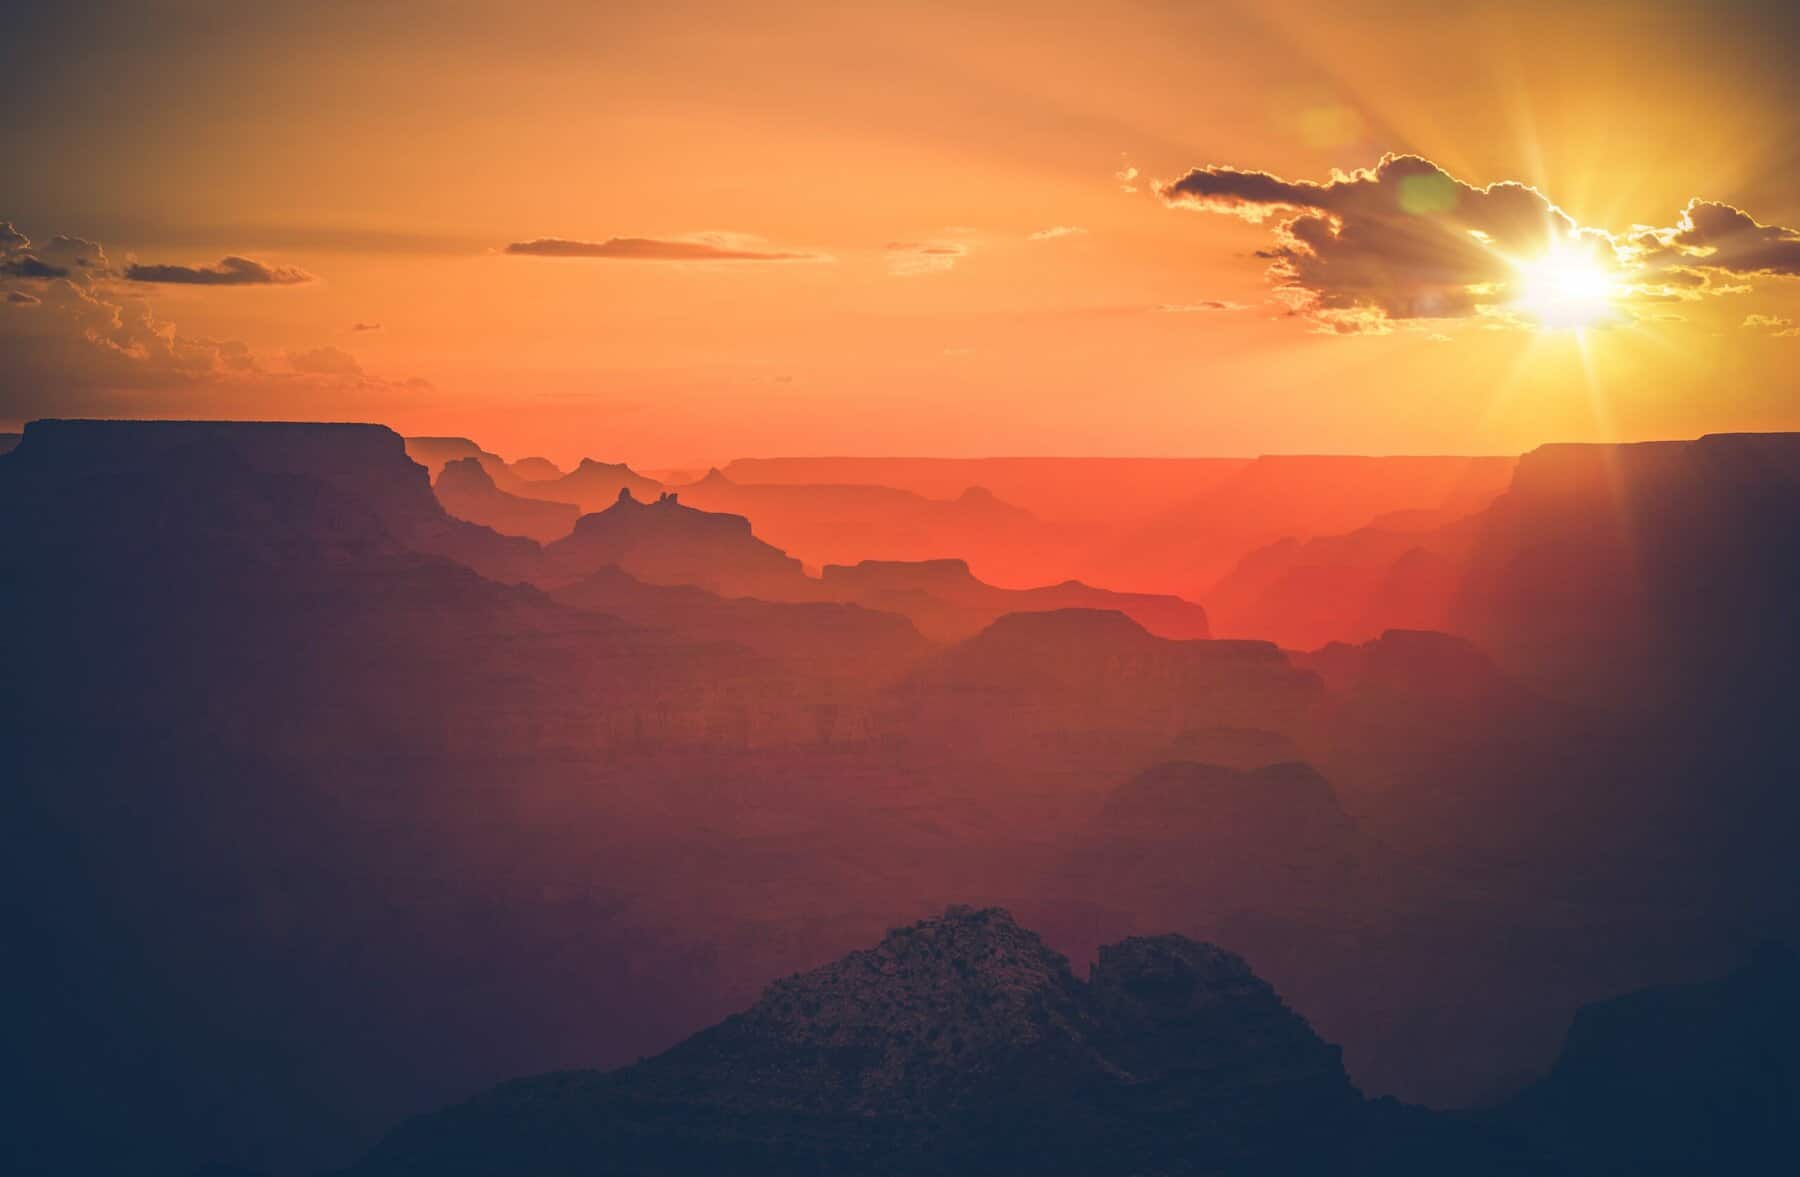 Arizona Grand Canyon Sunset. Scenic Sunset in Grand Canyon National Park, Arizona, United States.